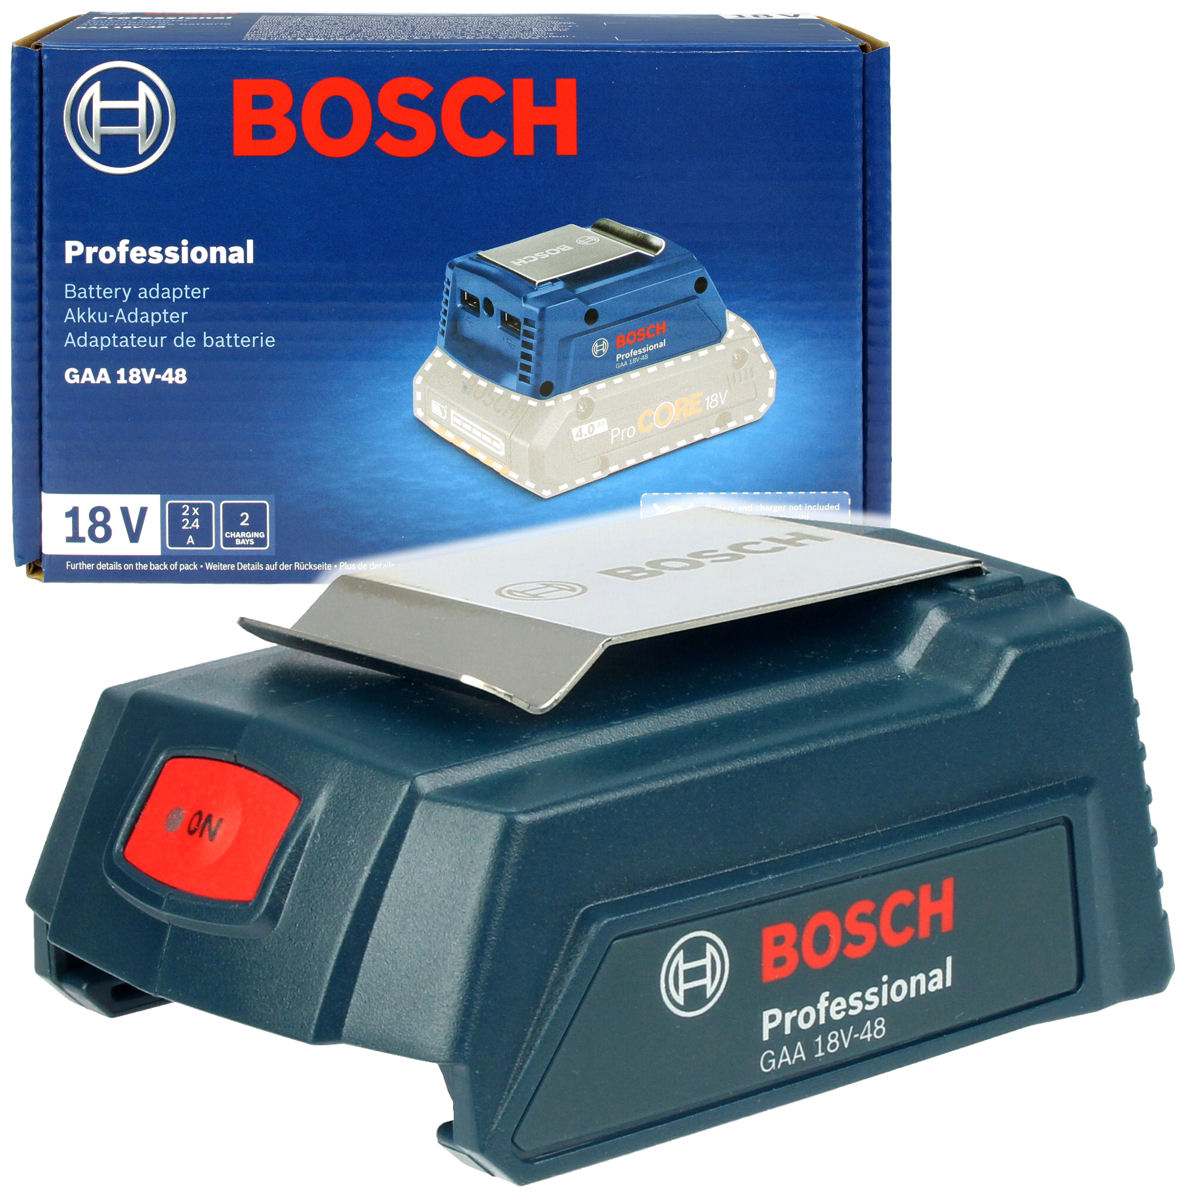 Bosch Professional Chargeur système 18 V GAA 18 V-48 (adaptateur